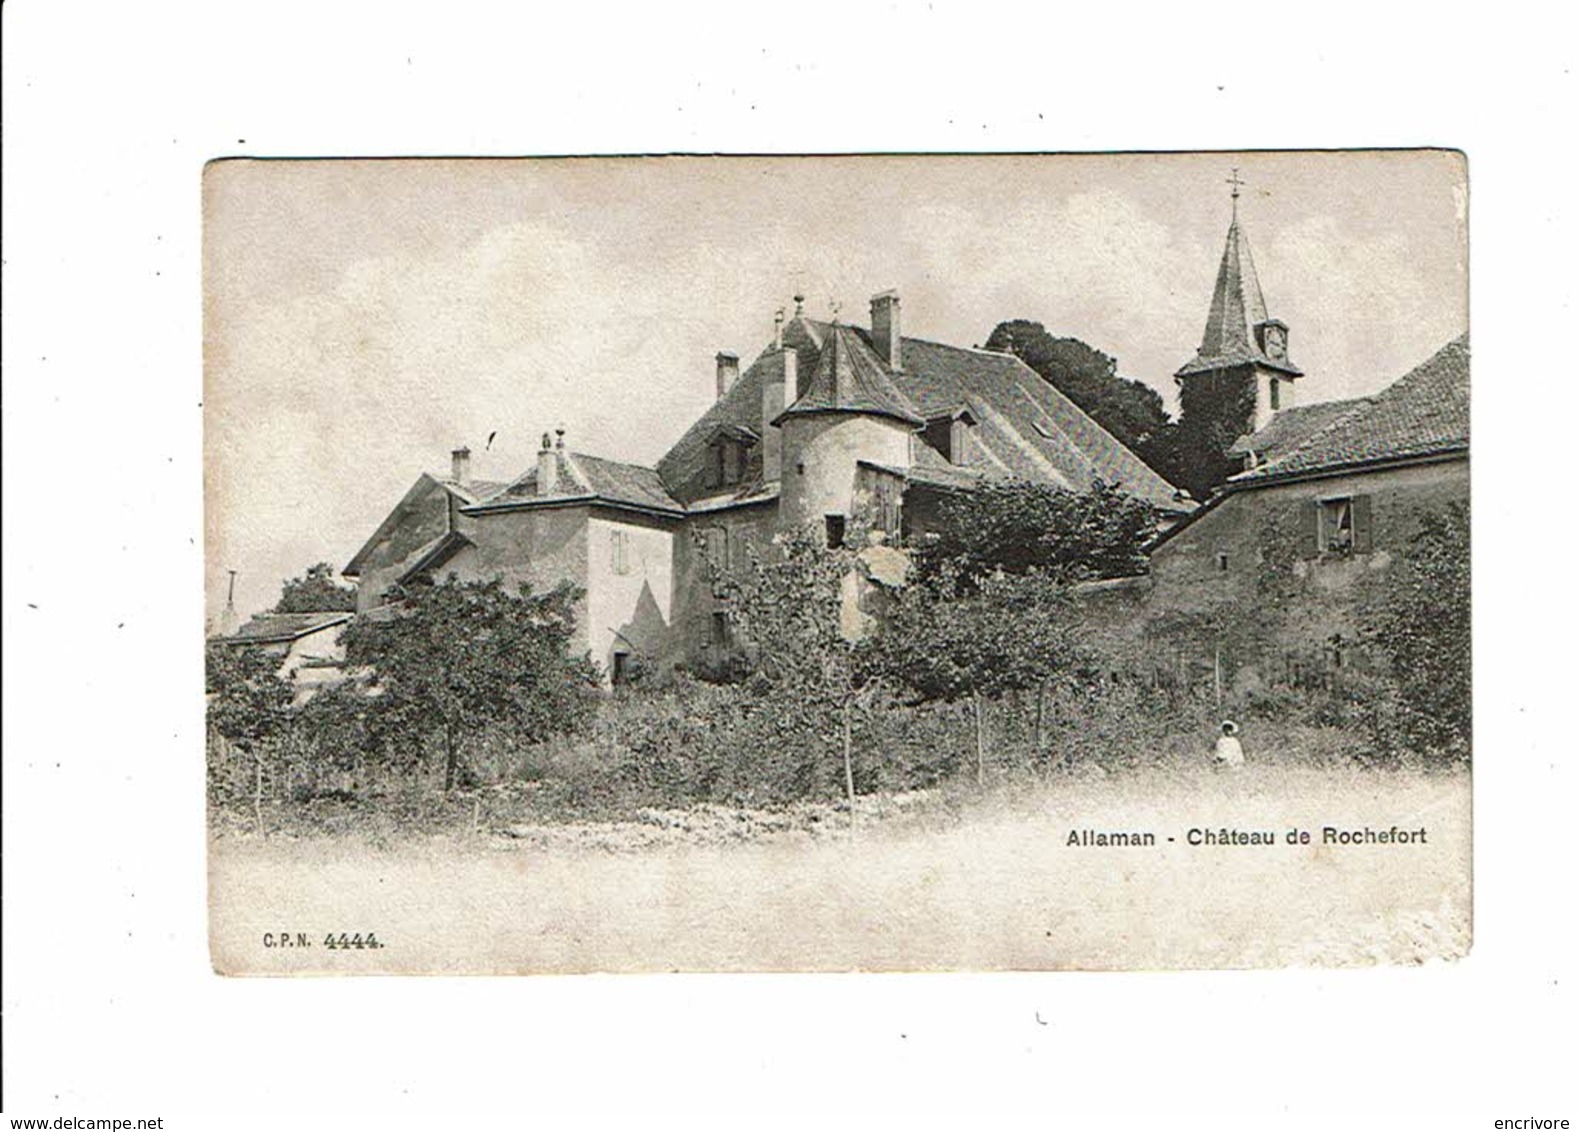 Cpa ALLAMAN Chateau De Rochefort CPN 4444 - Allaman